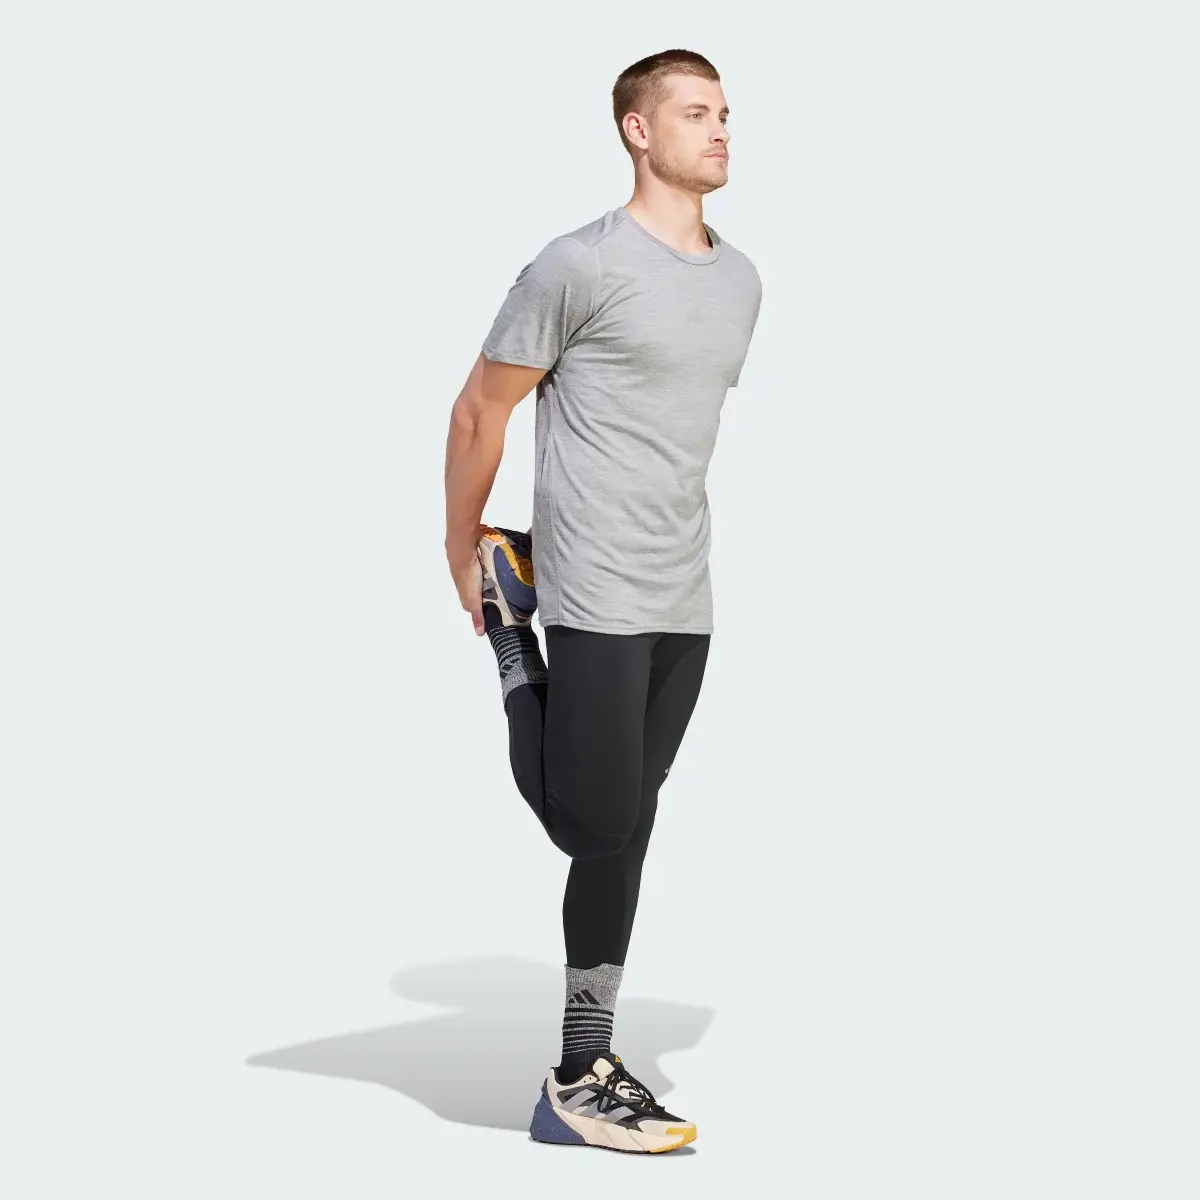 Adidas Leggings Quentes para Running AEROREADY Conquer the Elements Ultimate. 3